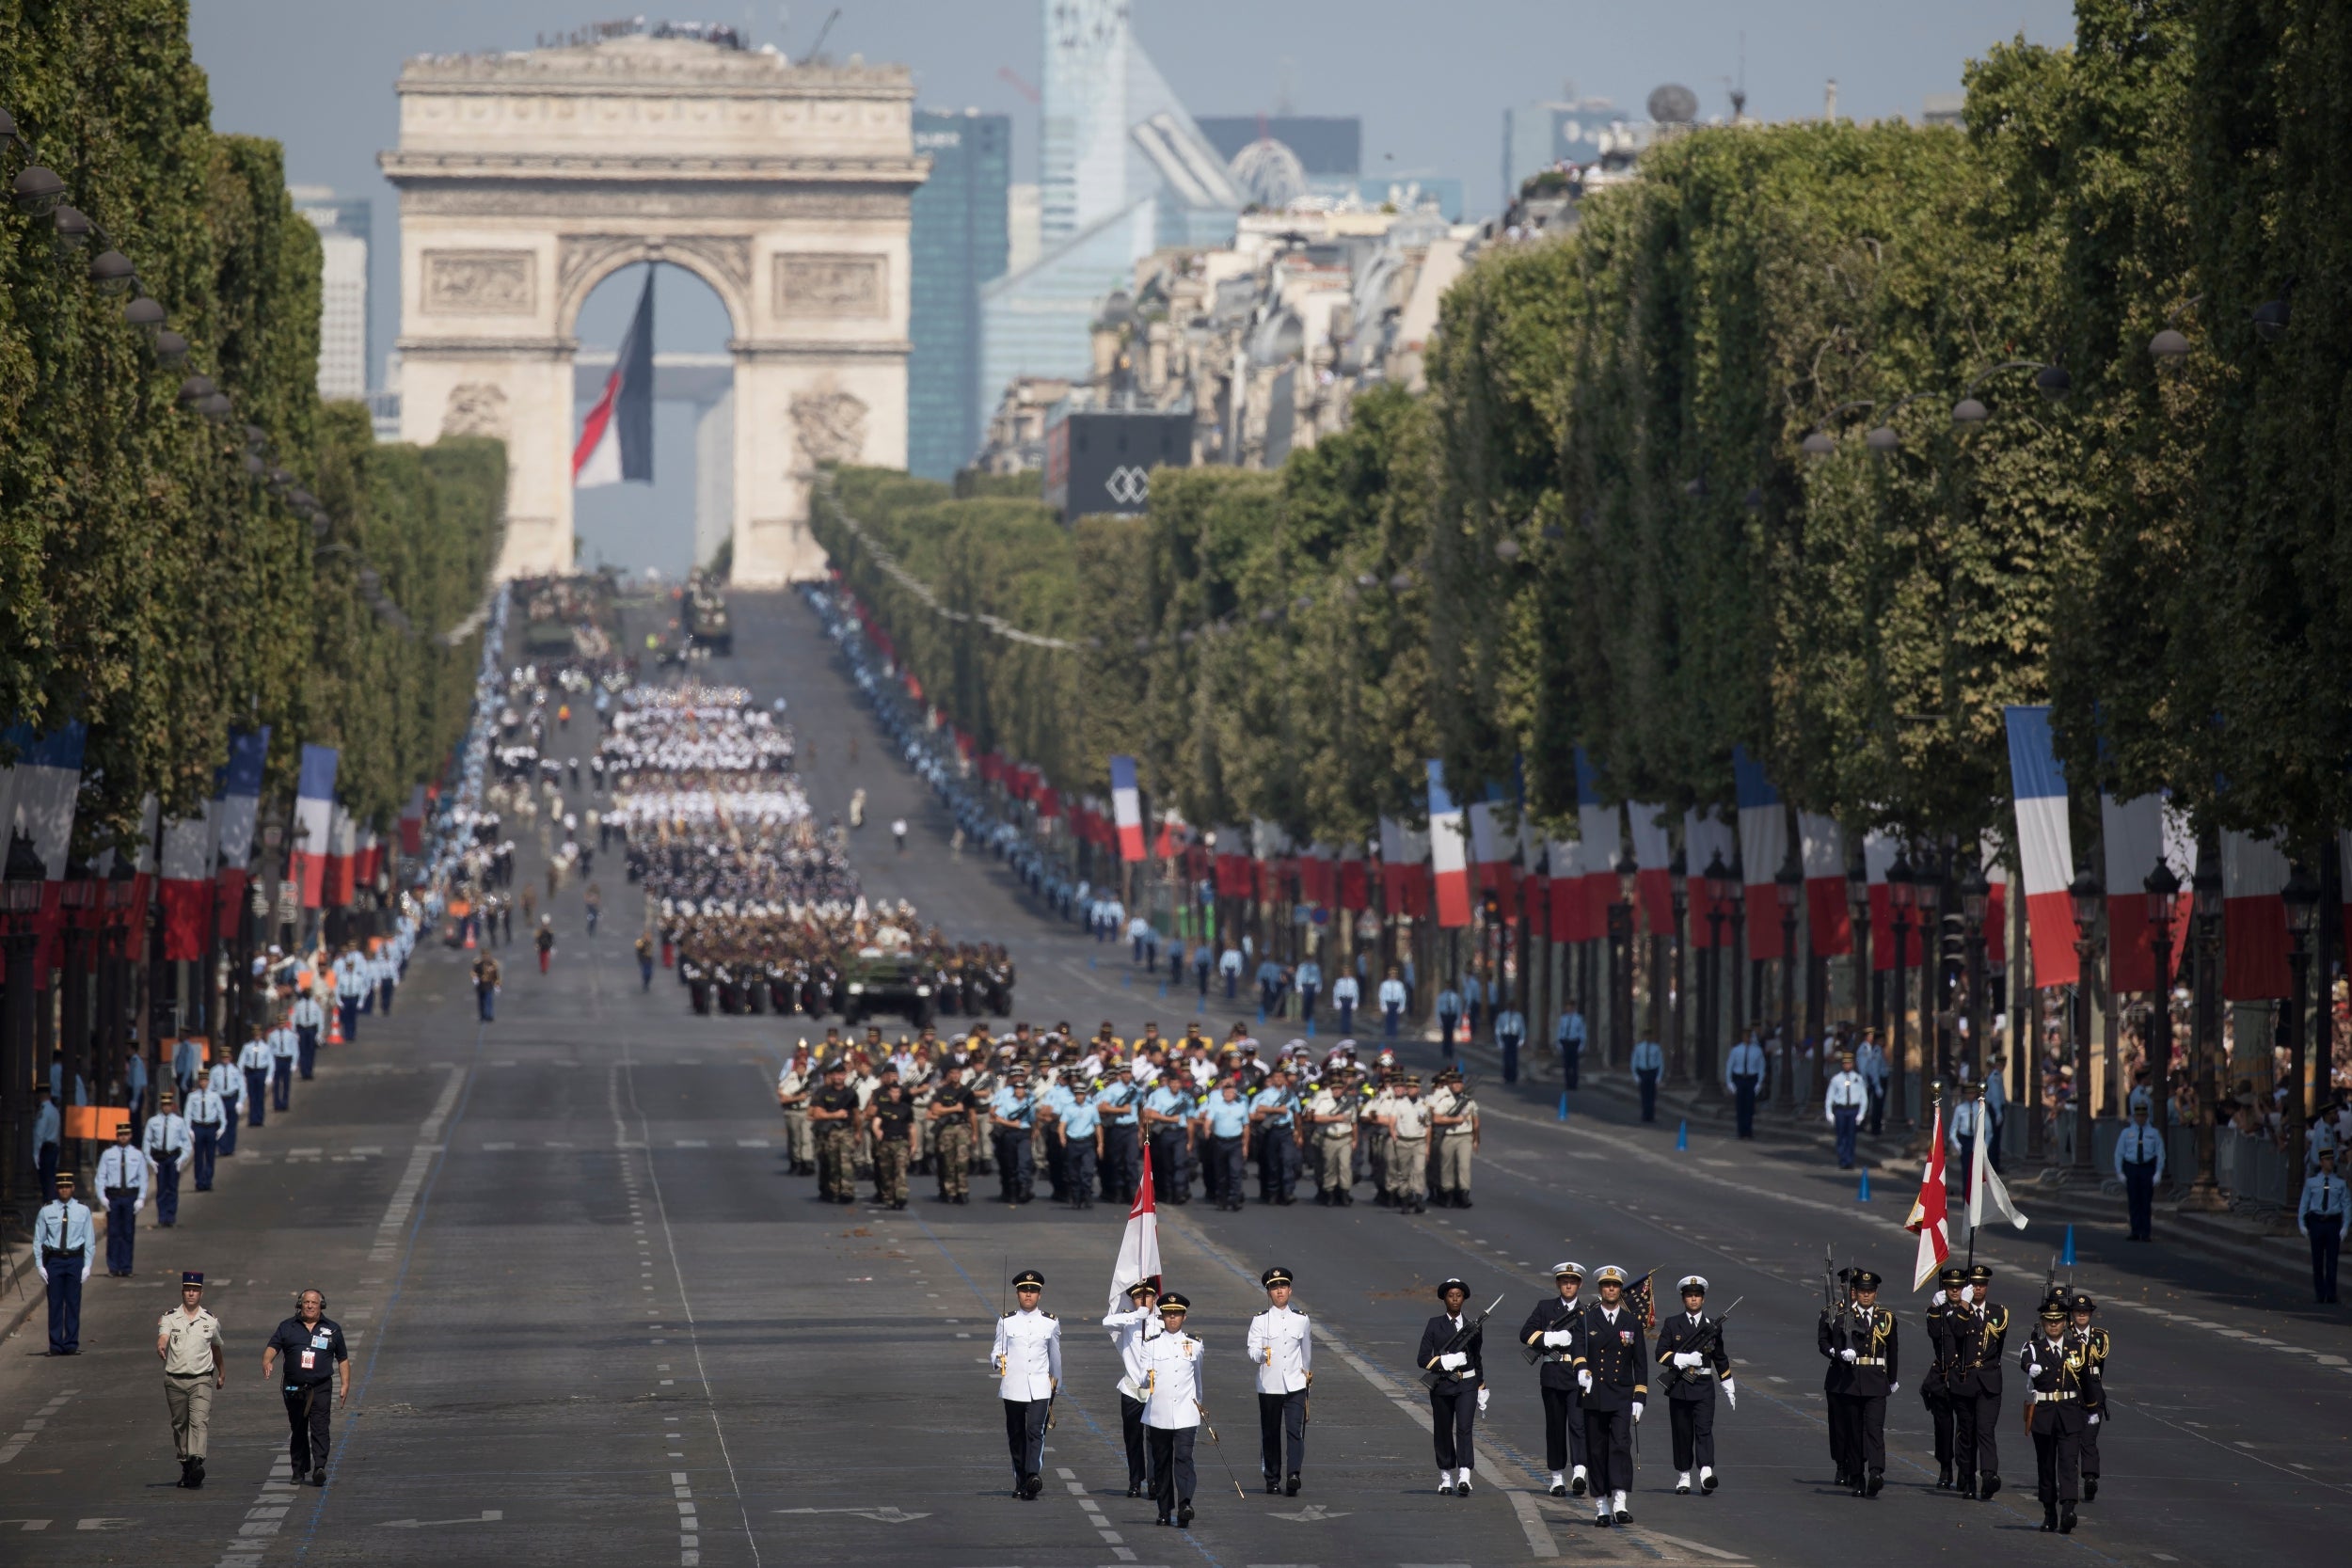 Bastille Day celebrations in Paris last year